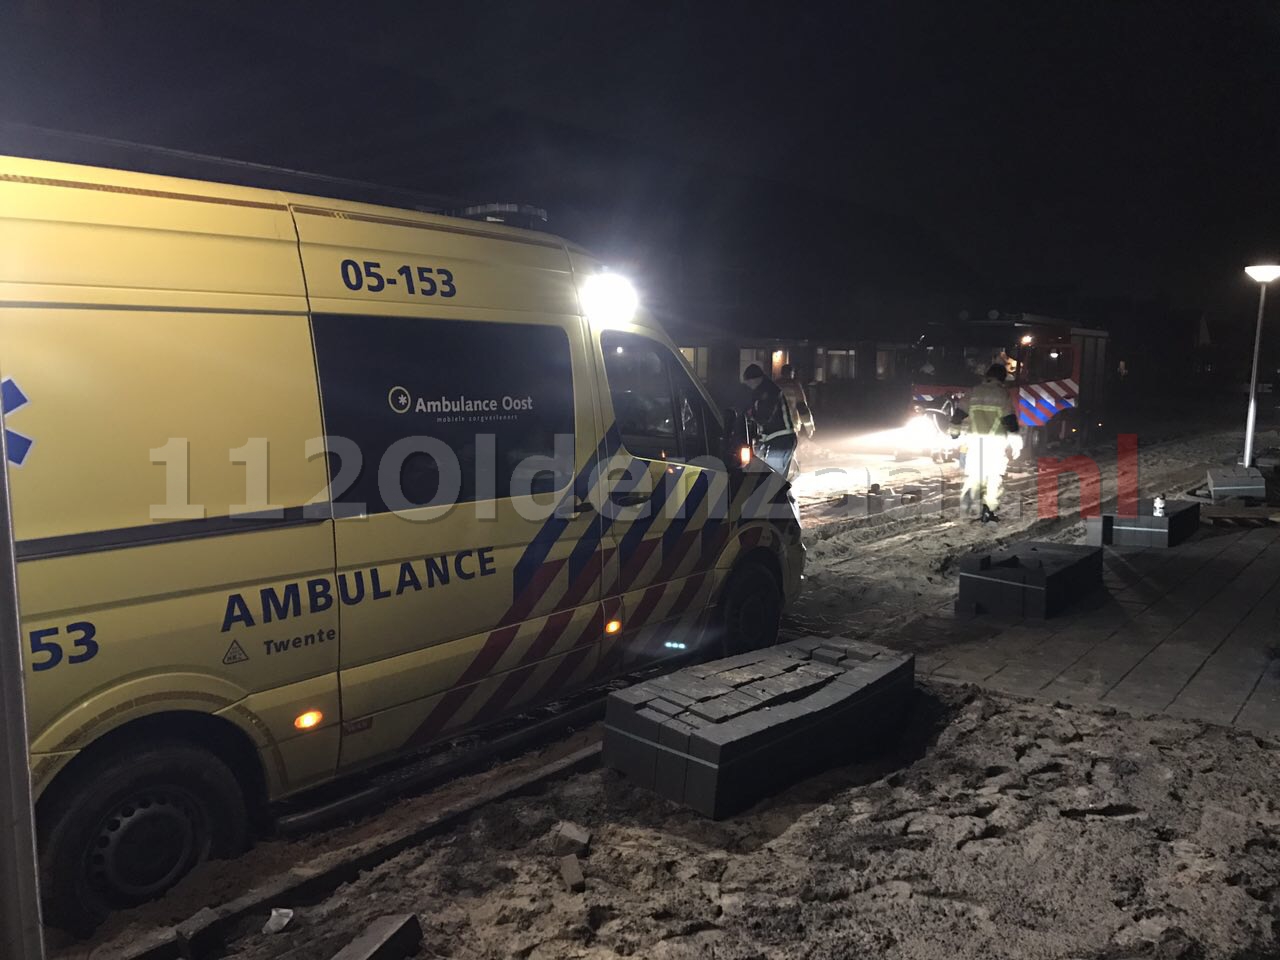 Foto: Ambulance vast in zand, brandweer schiet te hulp